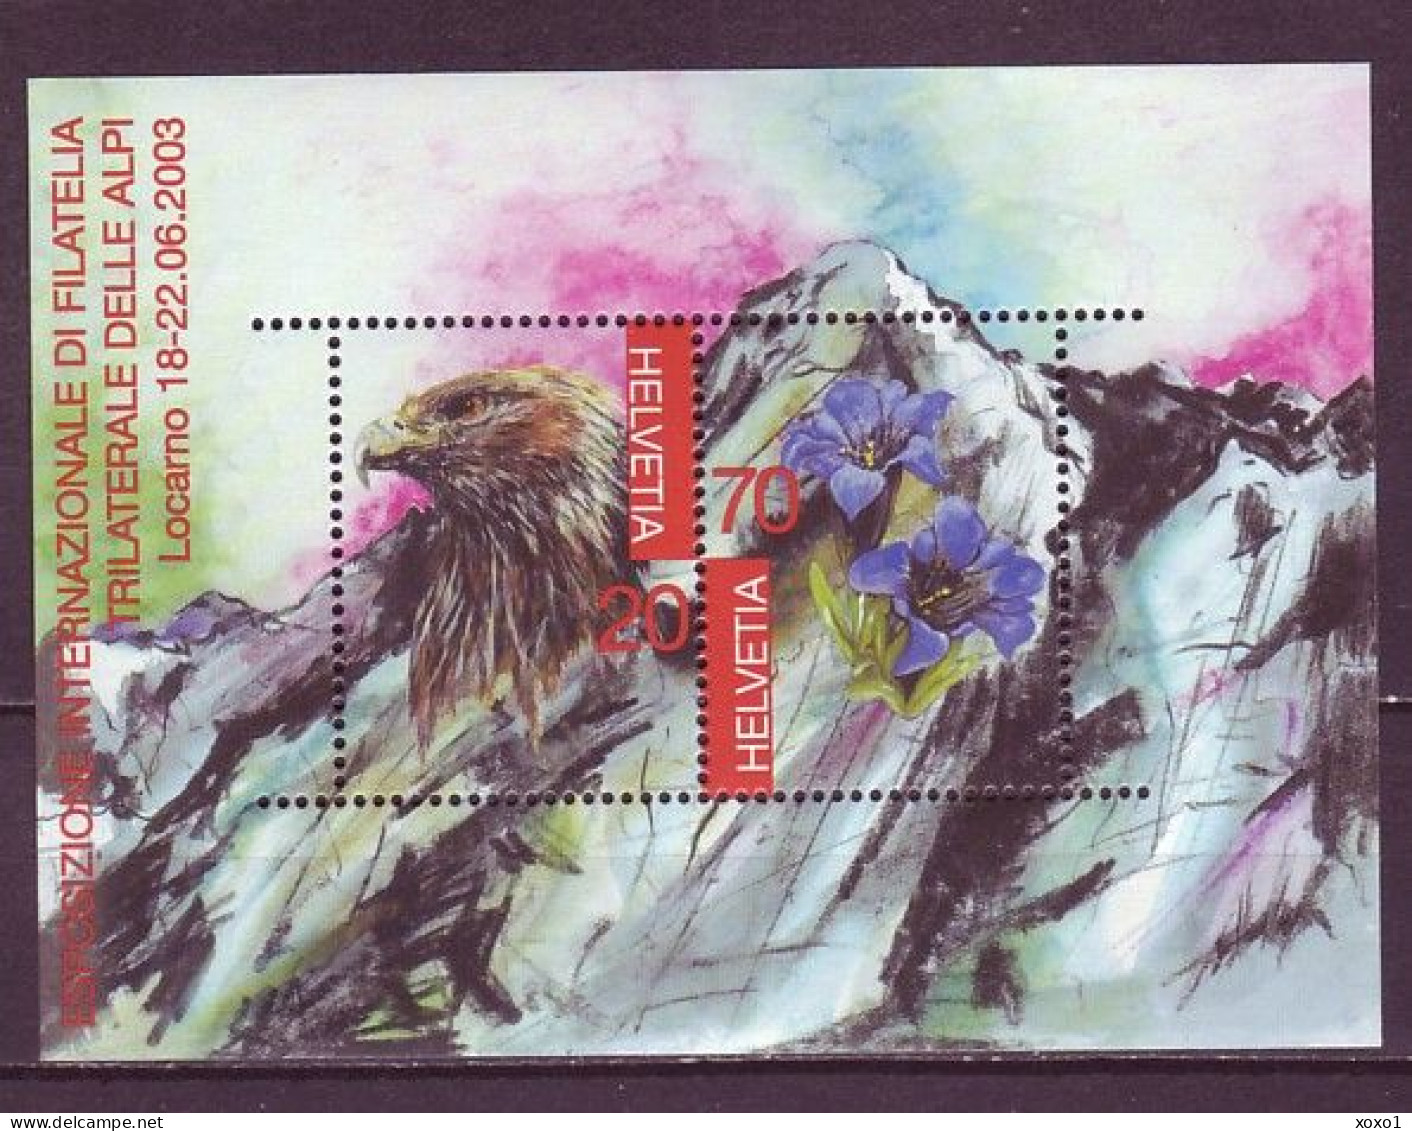 Switzerland 2003 MiNr. 1836 - 1837 (Block 33) Mont Dolent France–Switzerland–Italy Border Triangle S\sh MNH** 2.00 € - Bergen